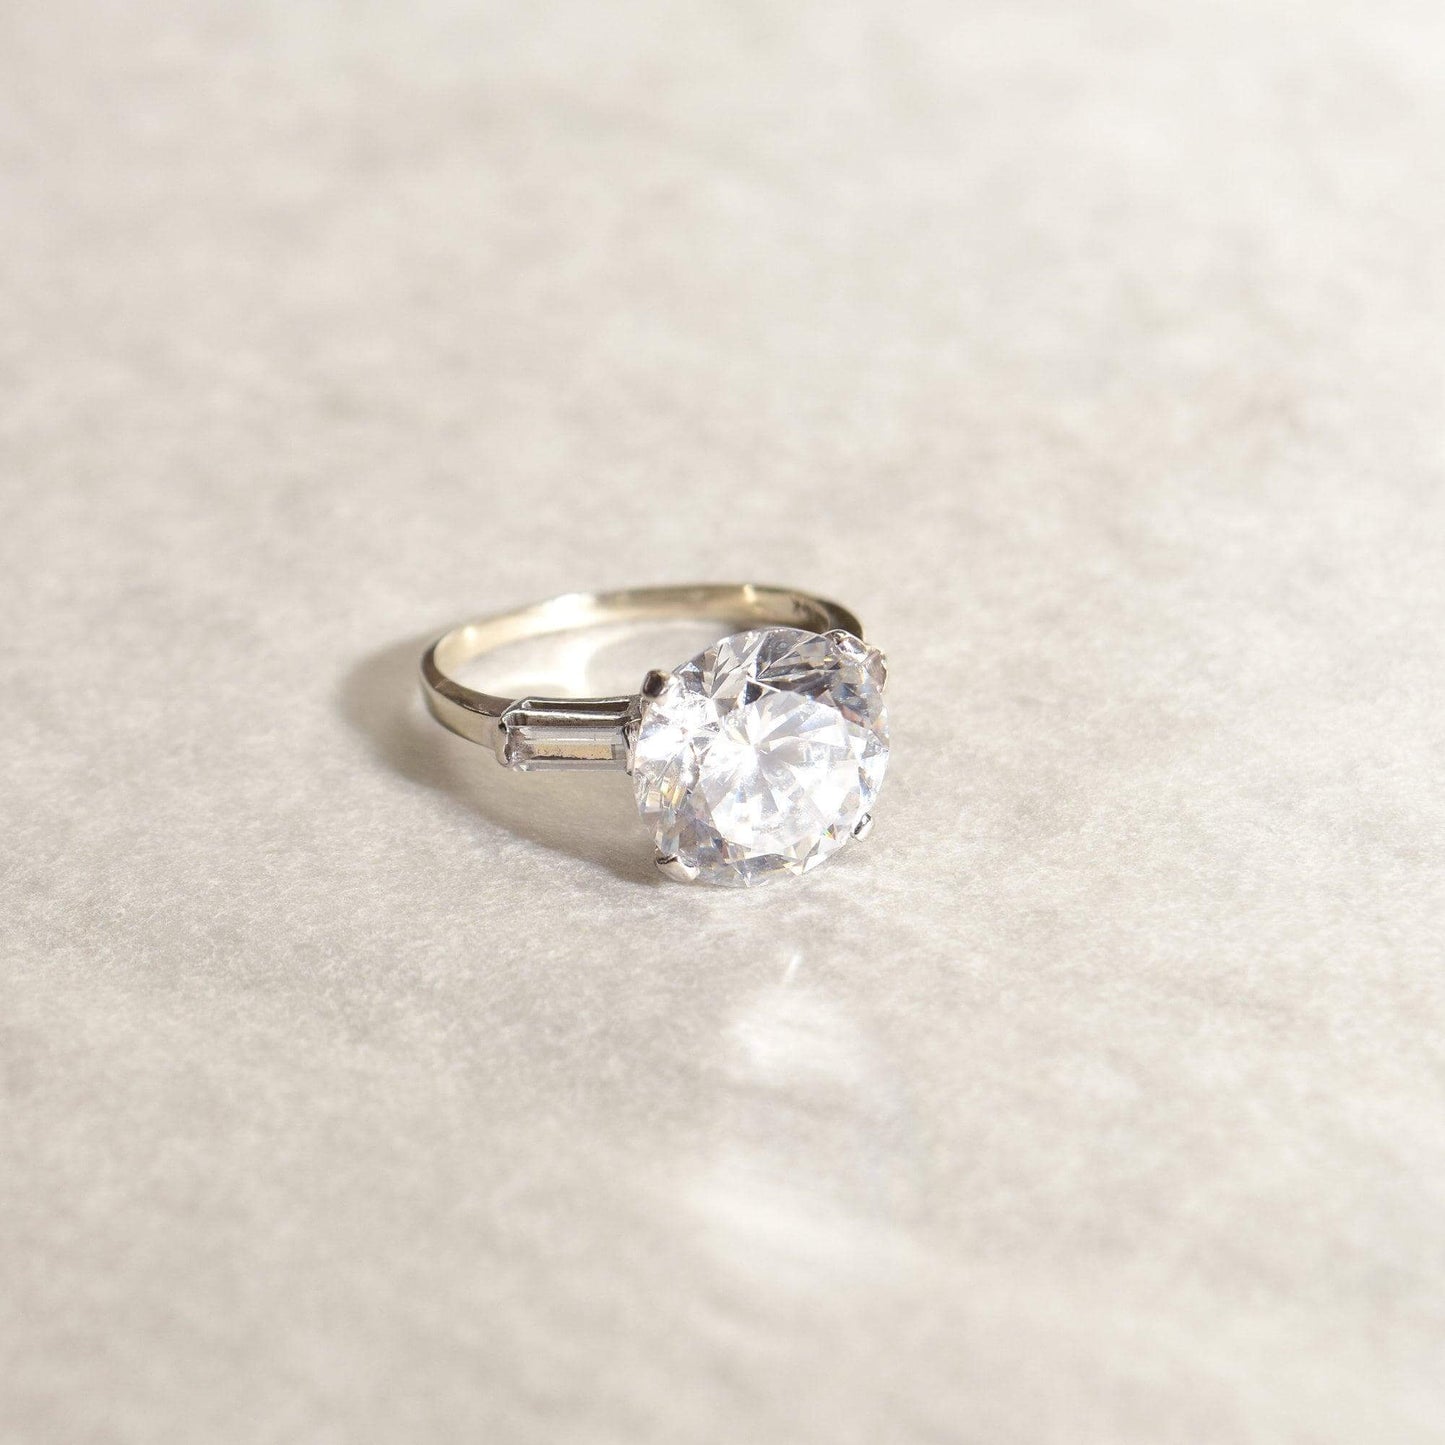 Huge 14K White Gold CZ Diamond Engagement Ring W/ Baguette Diamond Side Stones, Estate Jewelry, Size 8 US - Good's Vintage